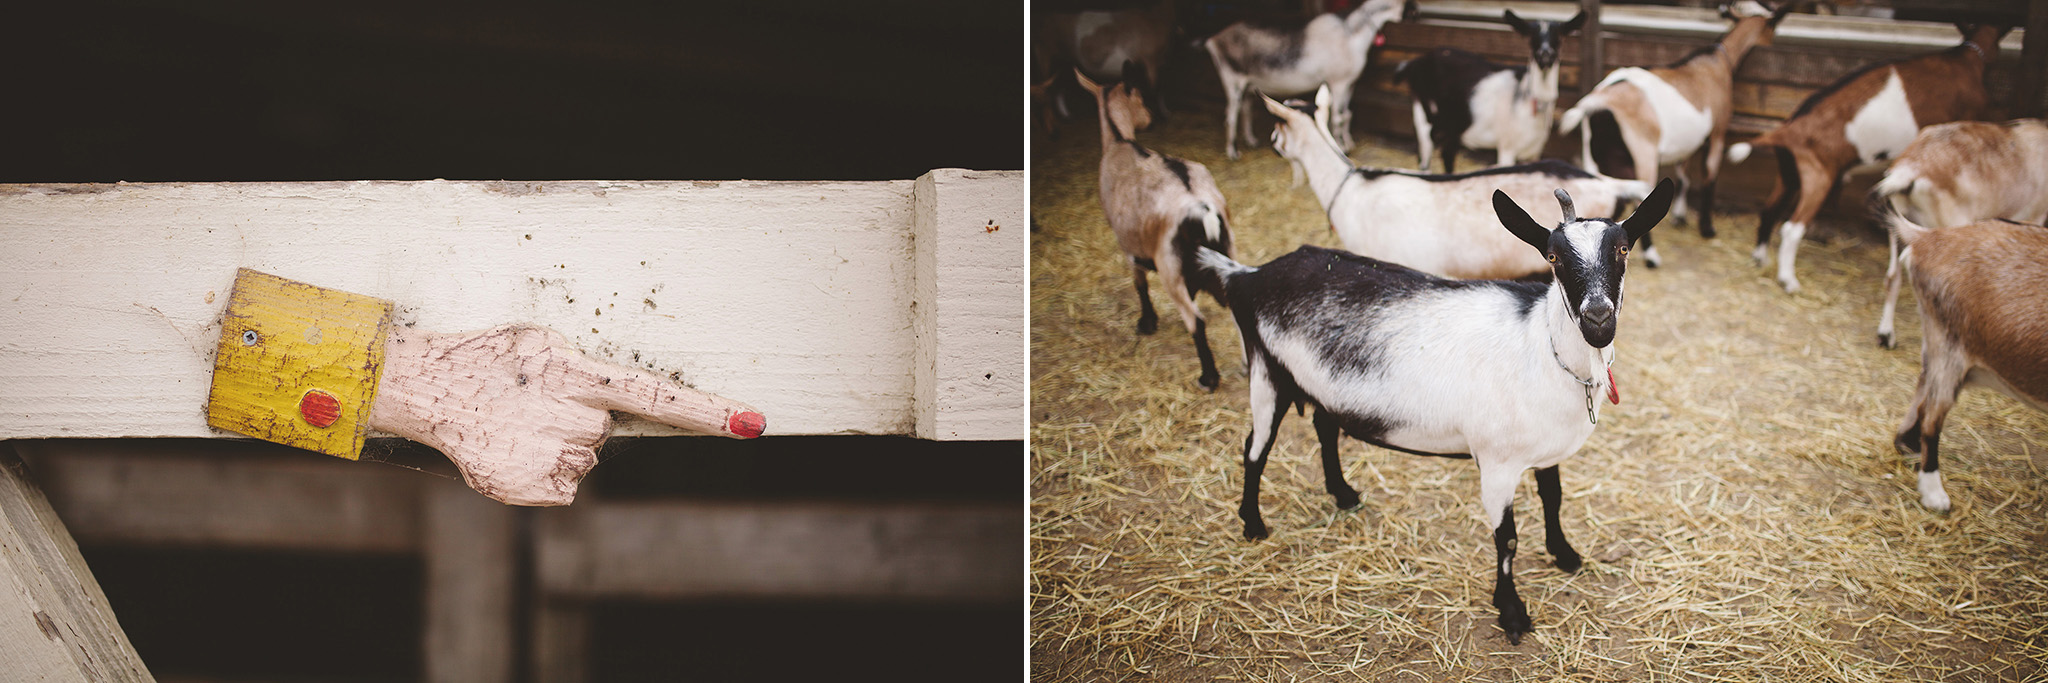 Harley goat farm wedding pictures in Pescadero california